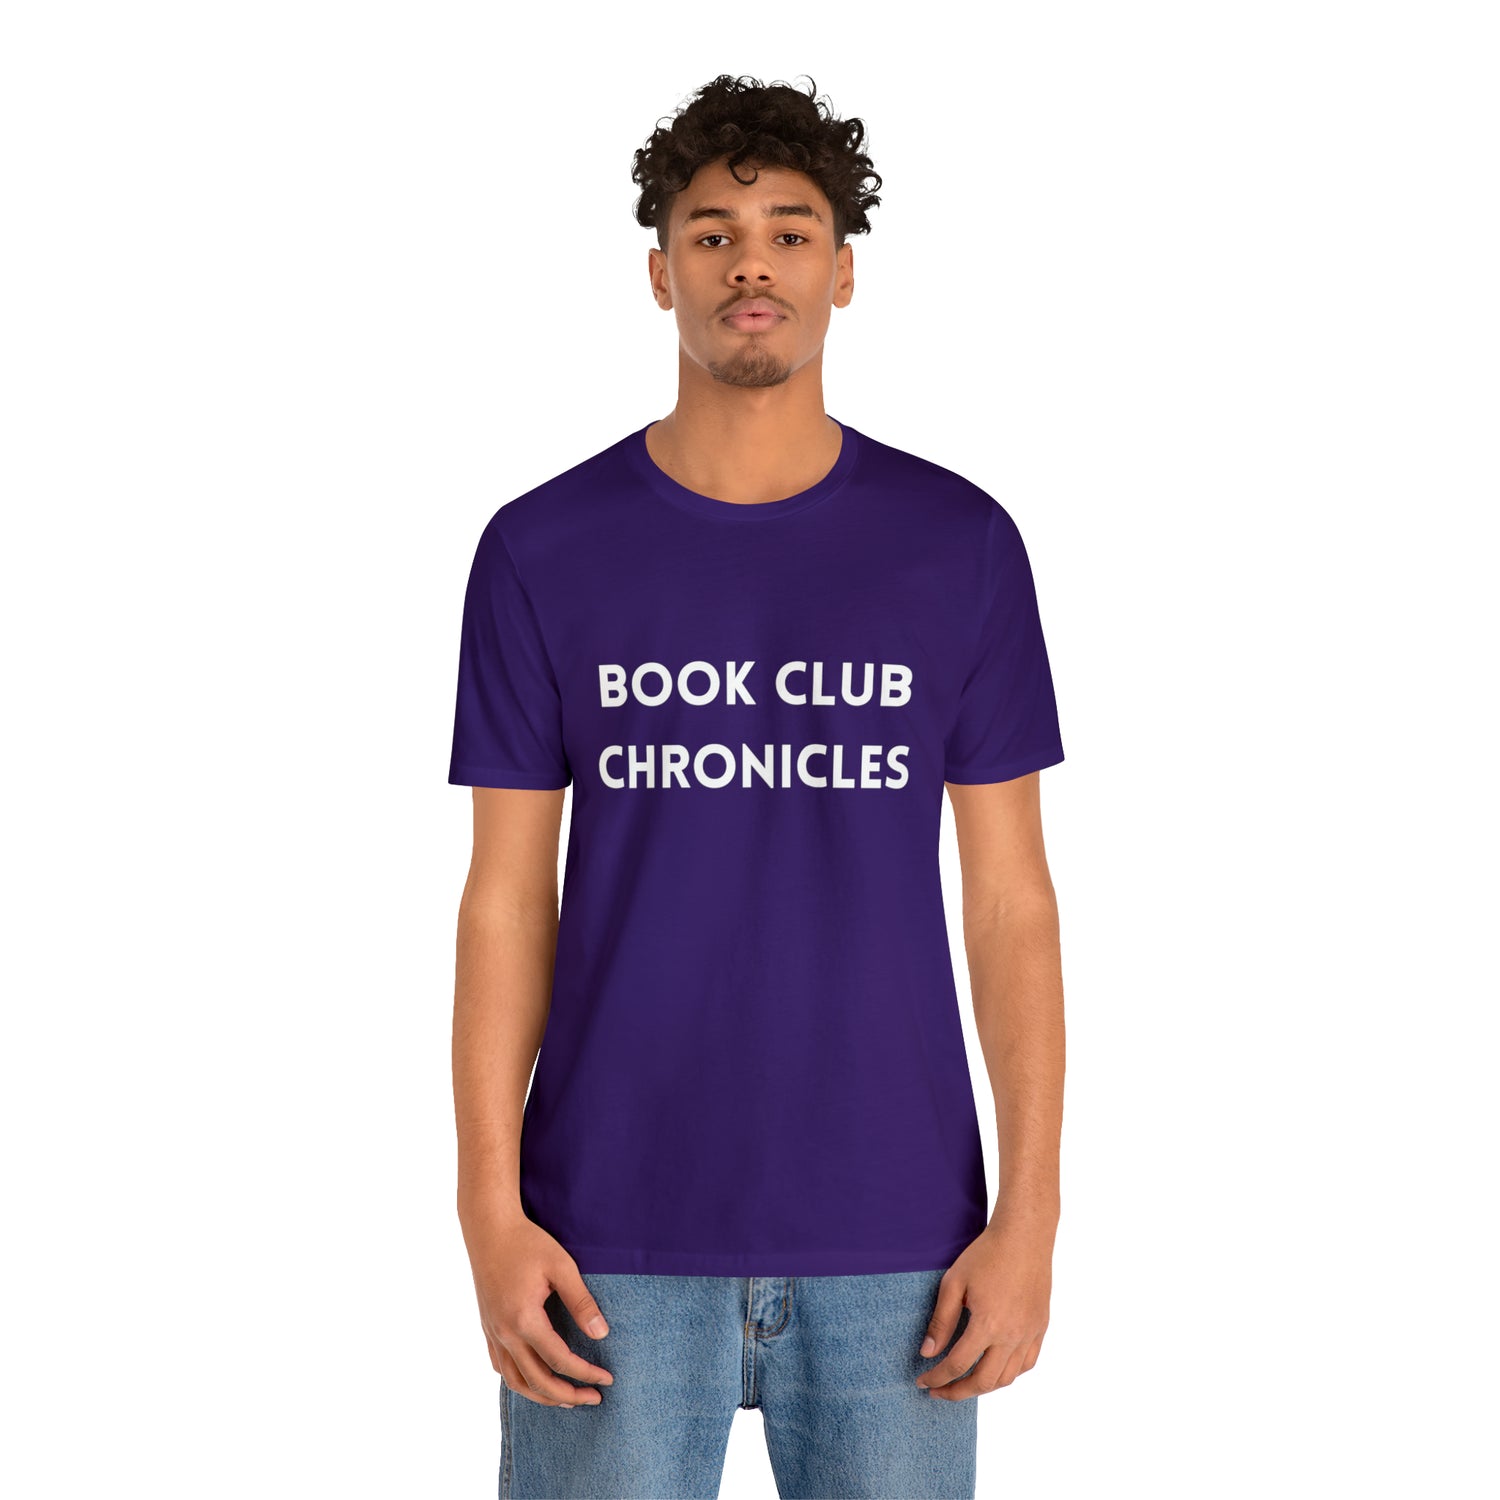 Bookworm Chic: 'Book Club Chronicles' T-Shirt for Avid Readers Team Purple T-Shirt Petrova Designs